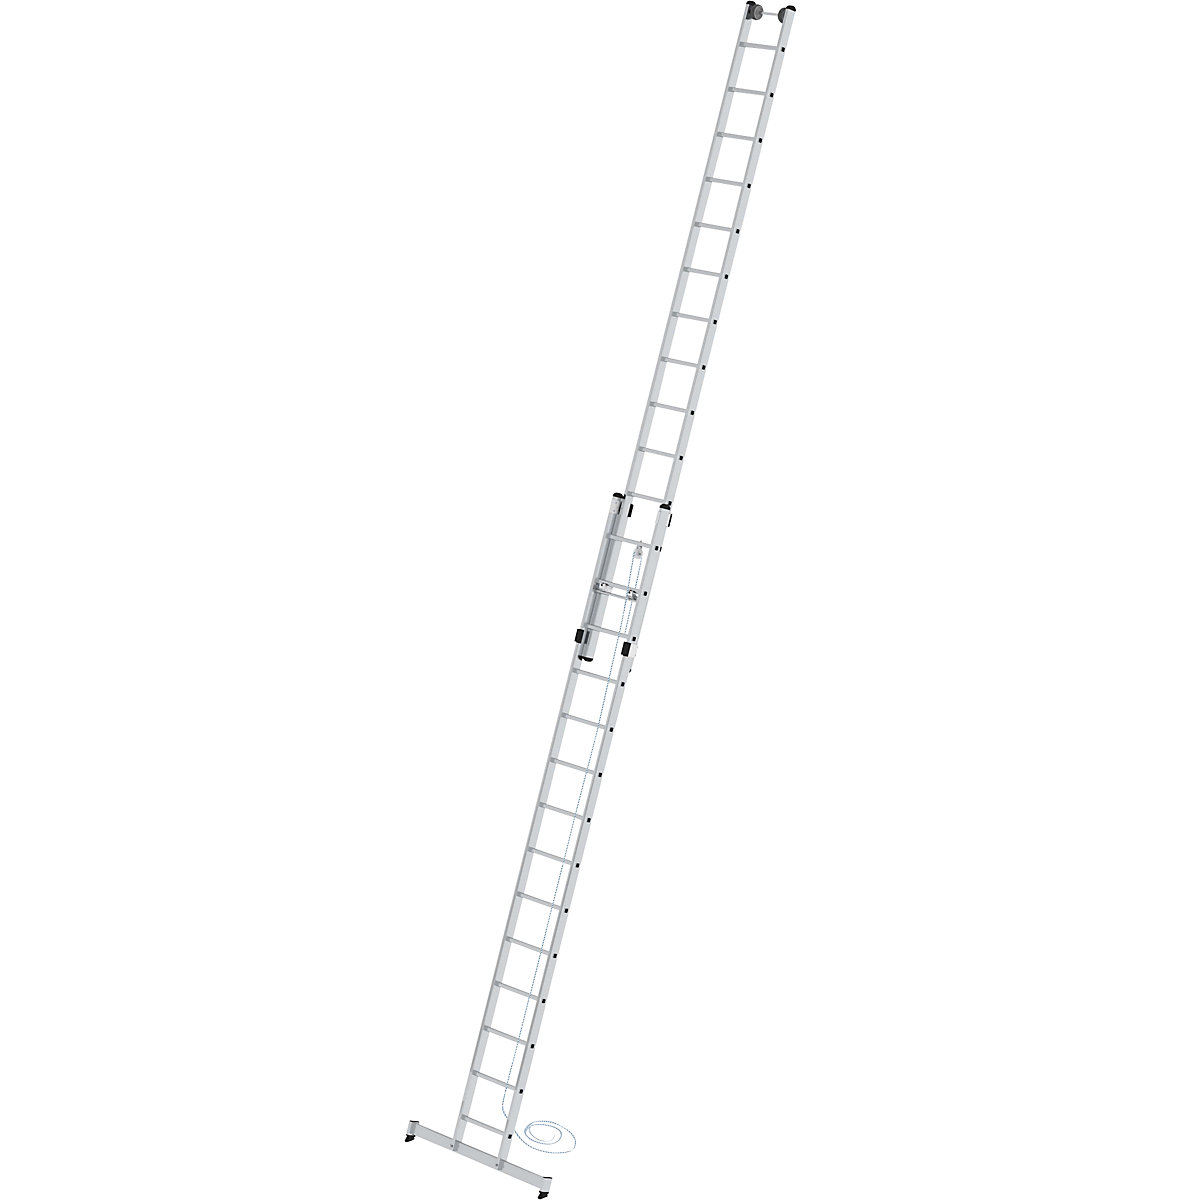 Height adjustable lean-to ladder - MUNK